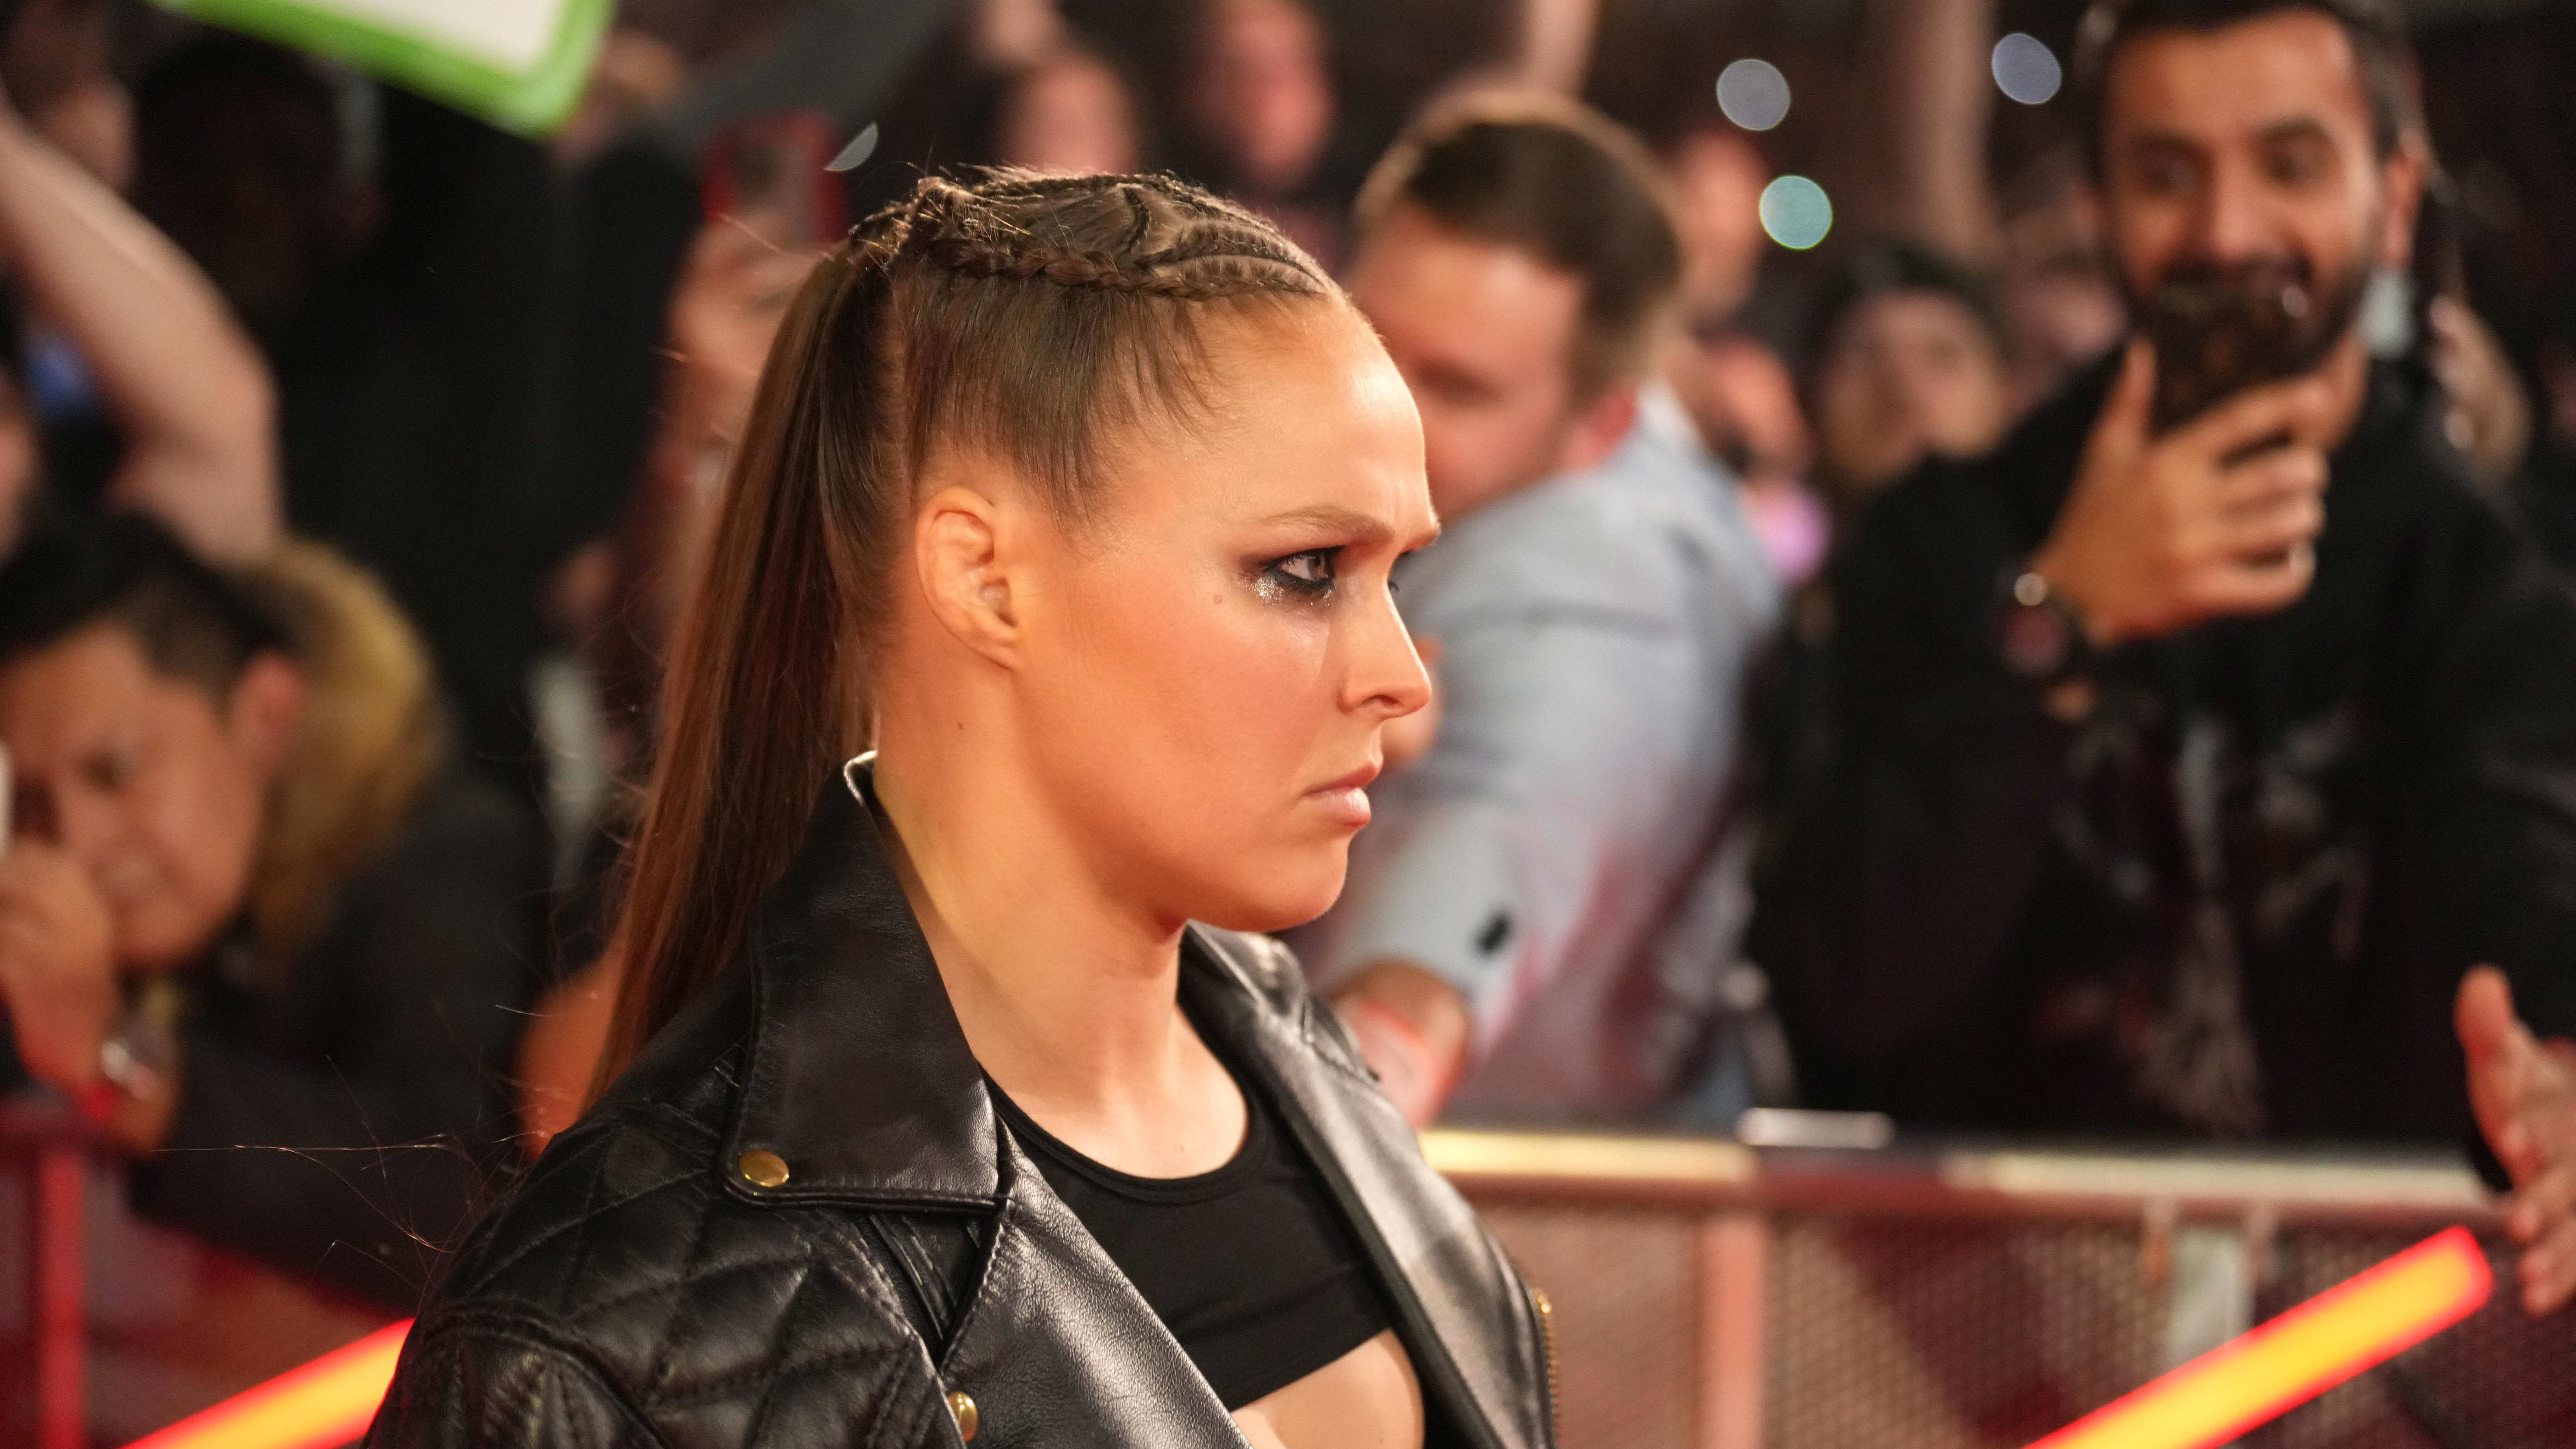 UFC Star Ronda Rousey Slams Joe Rogan & MMA Media: 'I Do Not Enjoy Being Paparazzi Famous'